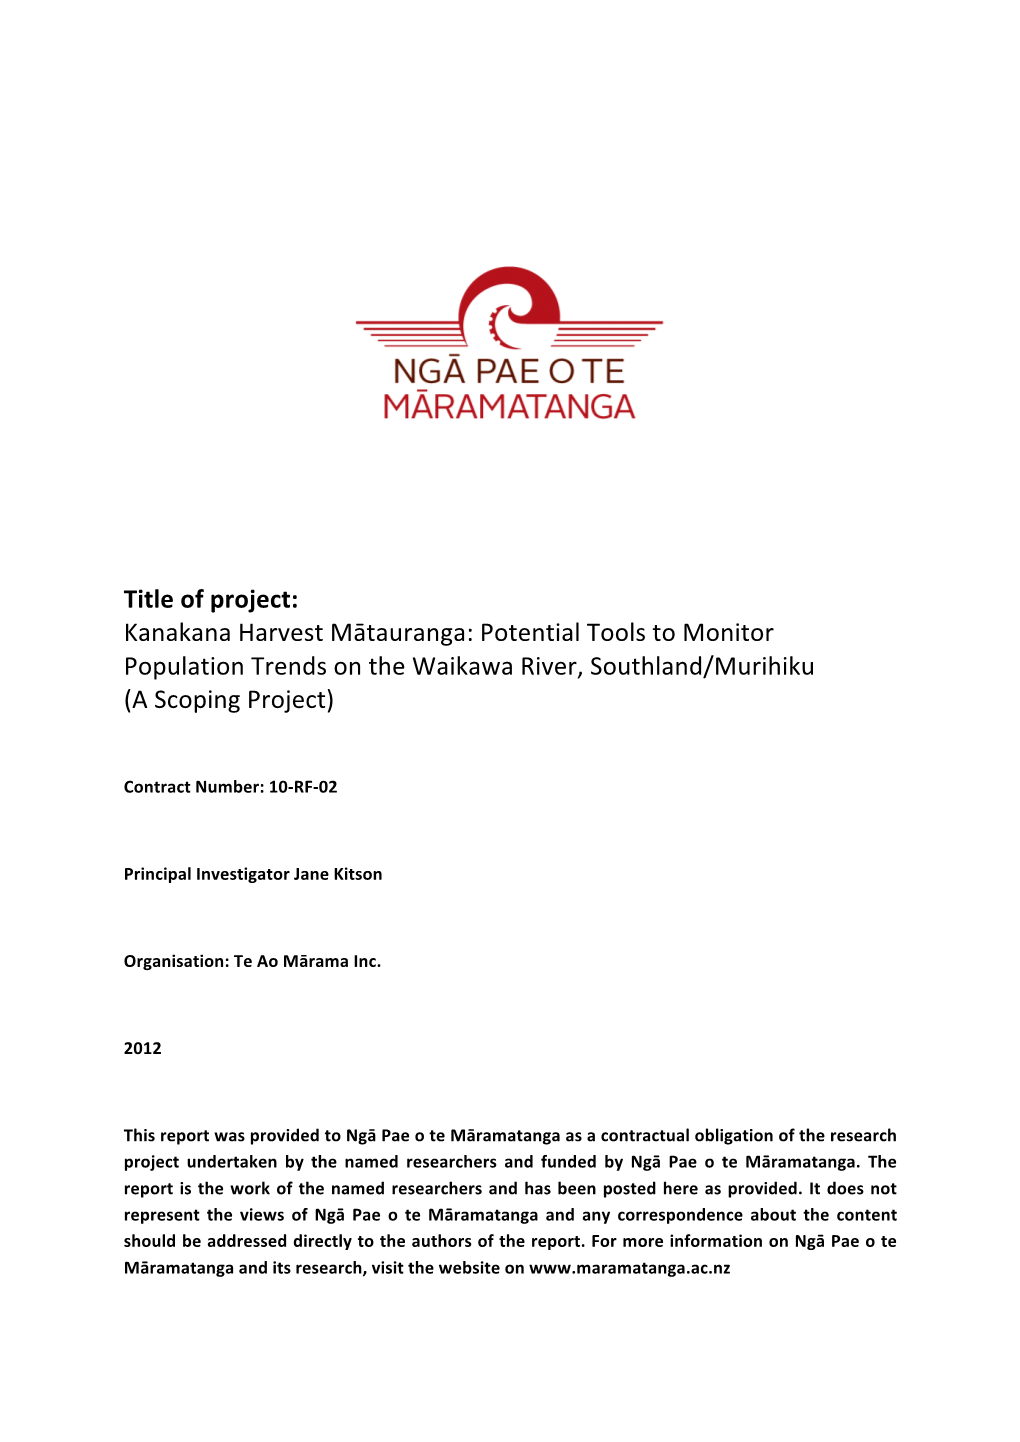 Kanakana Harvest Mātauranga: Potential Tools to Monitor Population Trends on the Waikawa River, Southland/Murihiku (A Scoping Project)